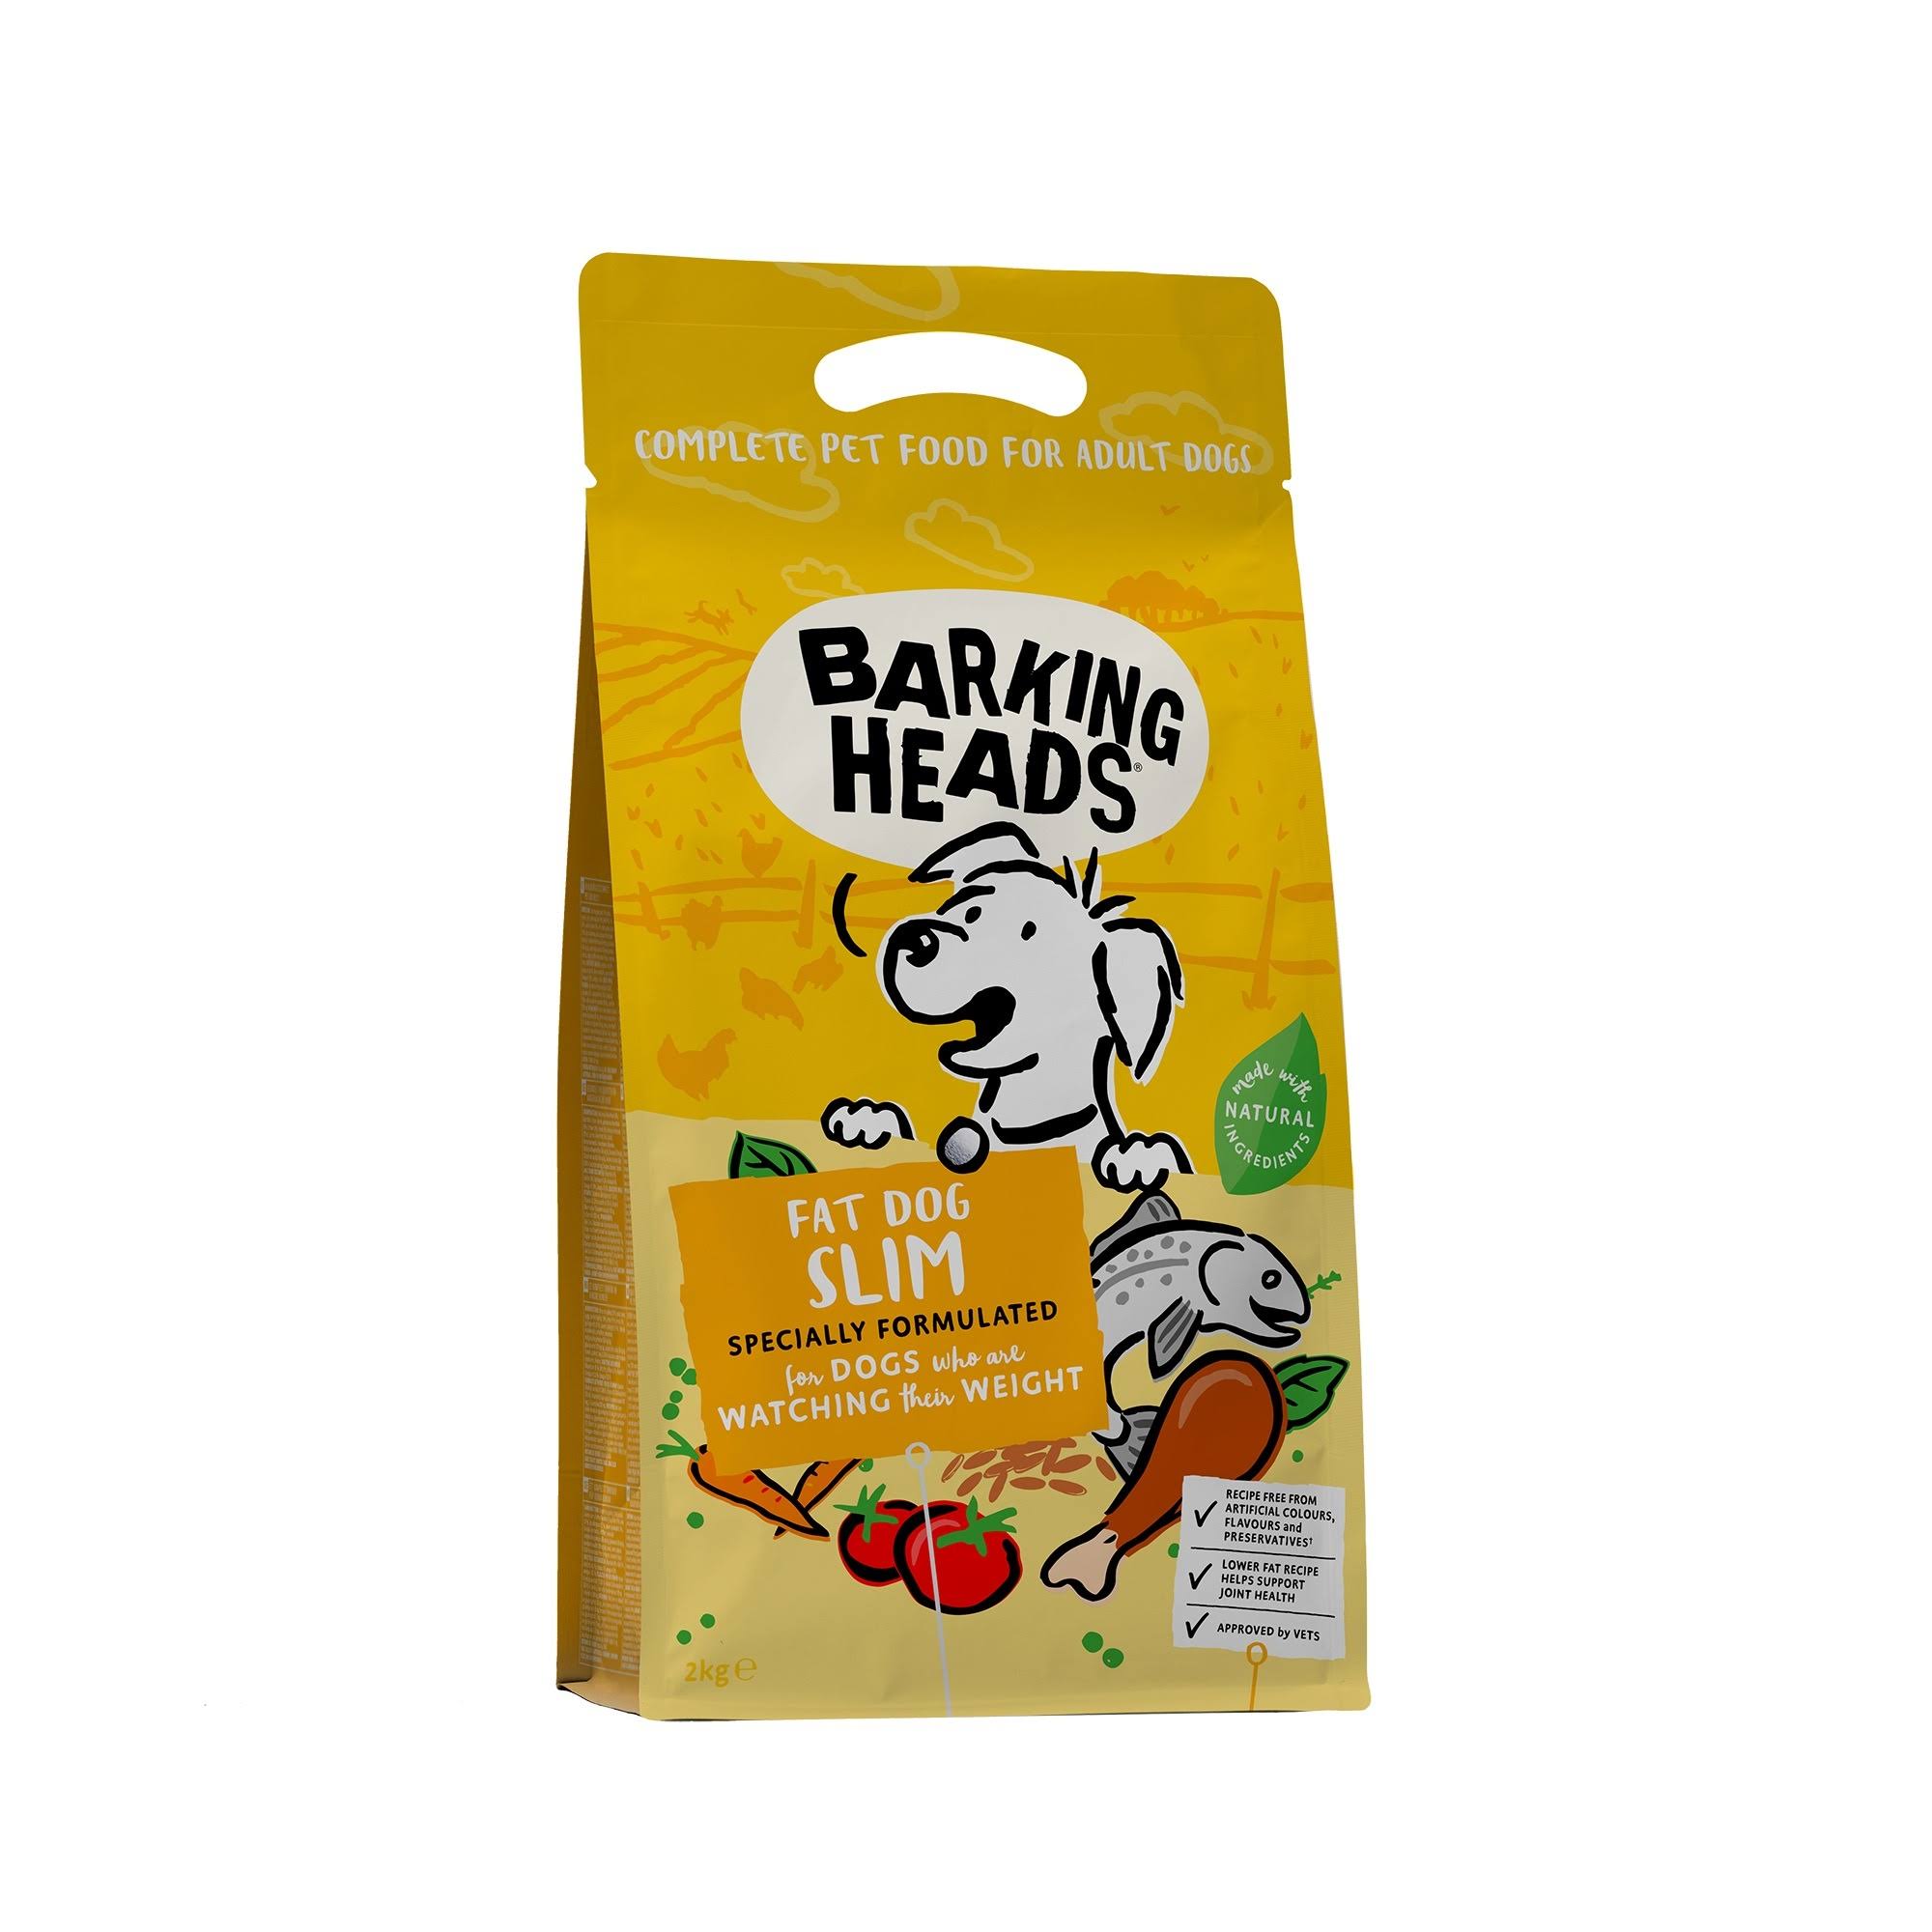 Barking Heads Fat Dog Slim Natural Adult Dog Food - Light Chicken & Trout